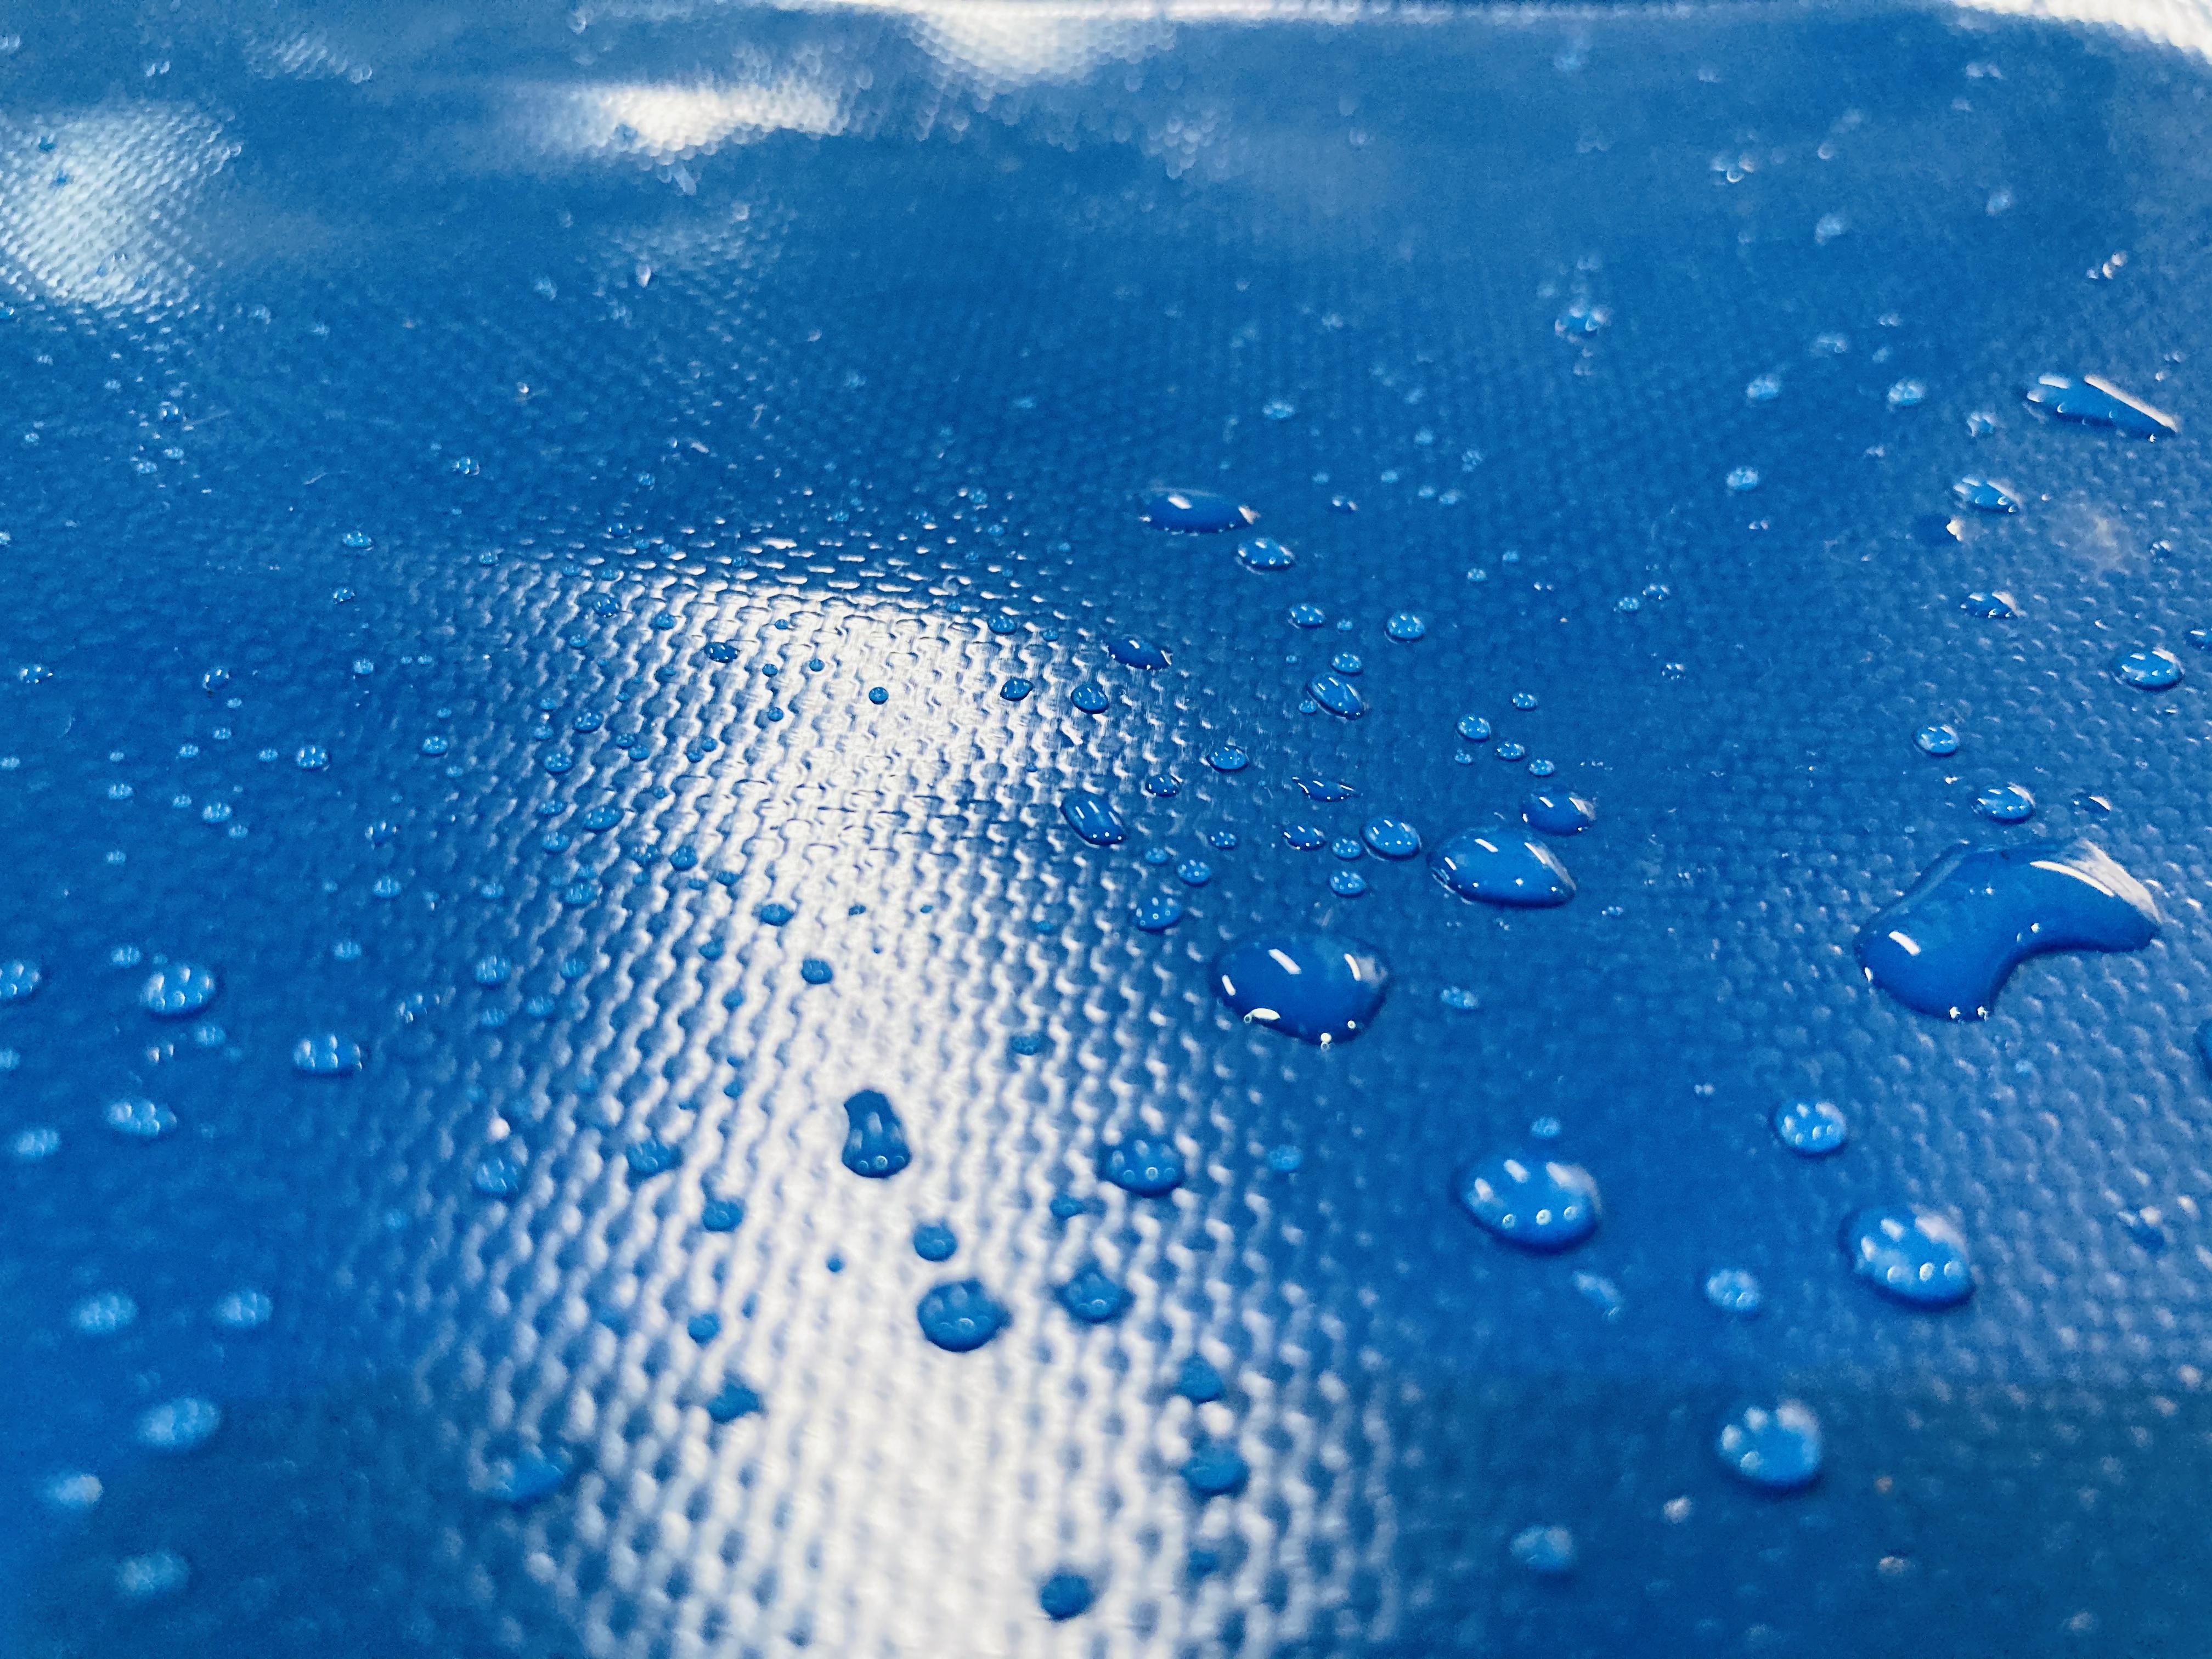 blue tarps for roofs,blue pvc tarpaulin cover,heavy duty blue tarpaulin,blue tarpaulin,